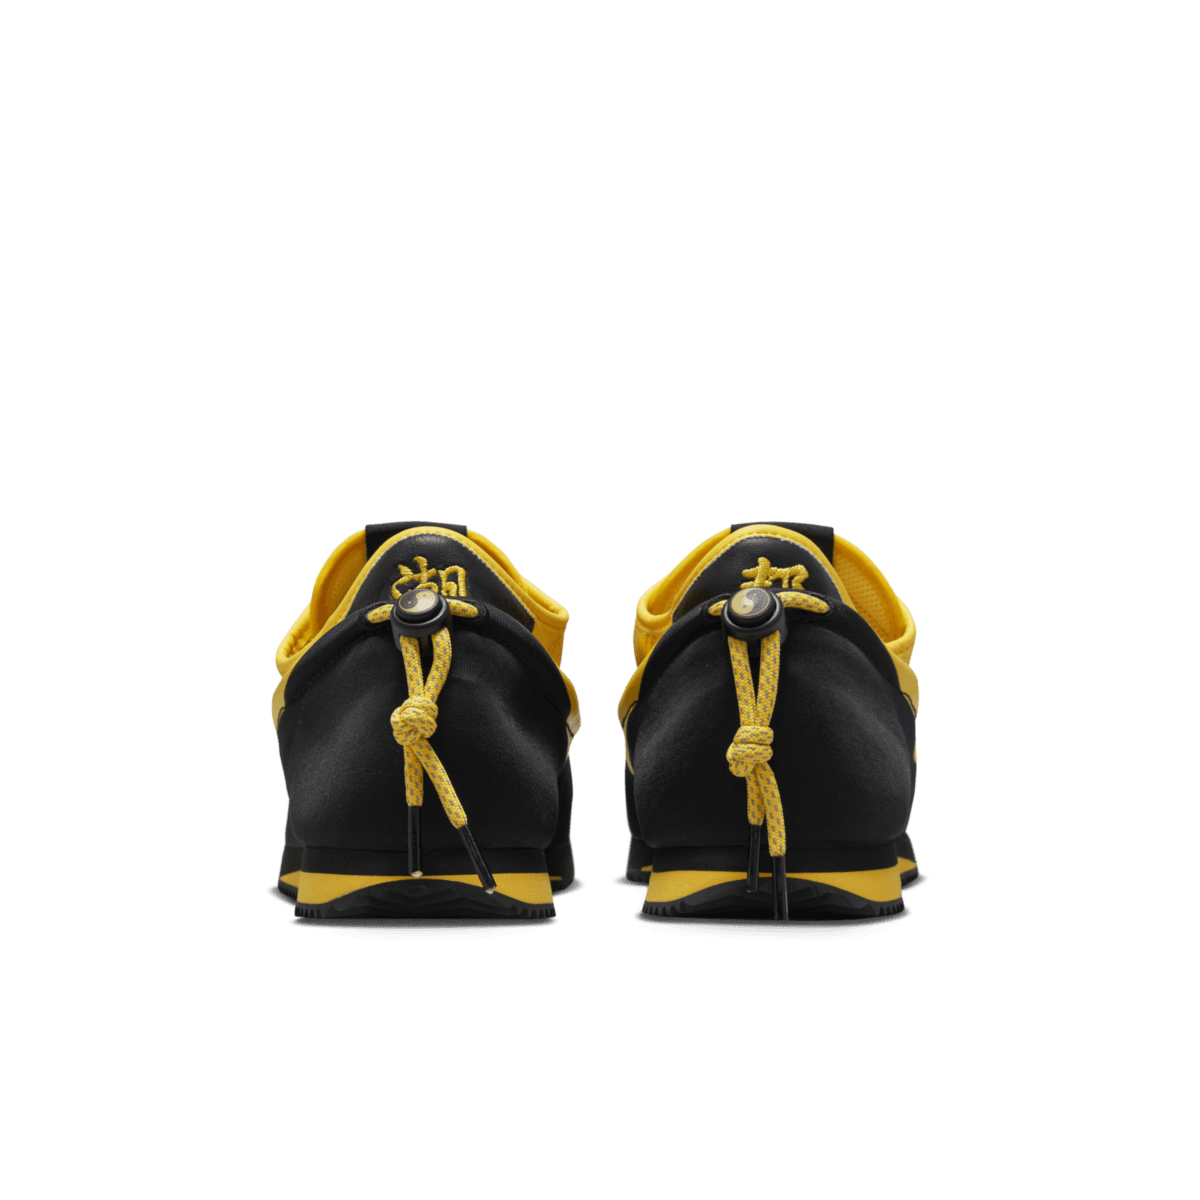 CLOT x Nike 'Bruce Lee' Clotez